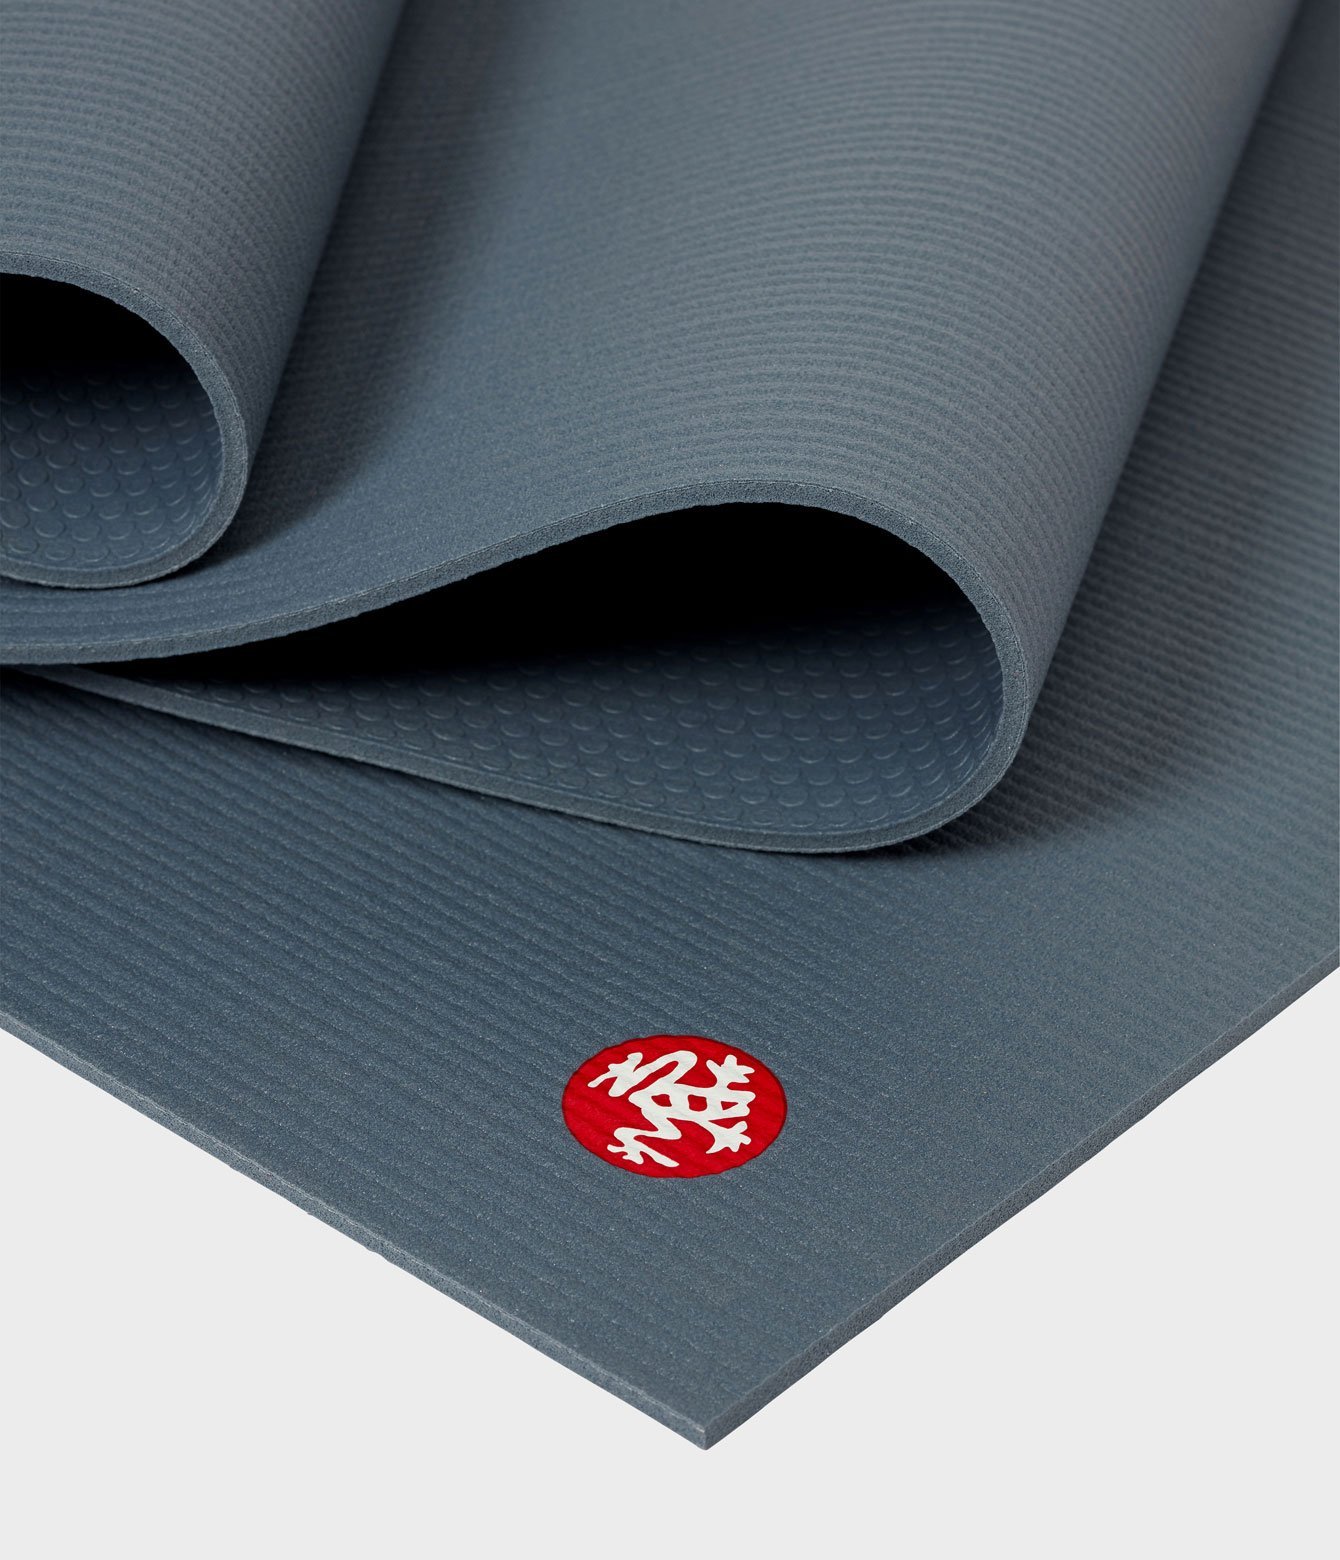 PROlite Yoga Mat 4.7 mm - OEKO-TEX Certified PVC, Storm